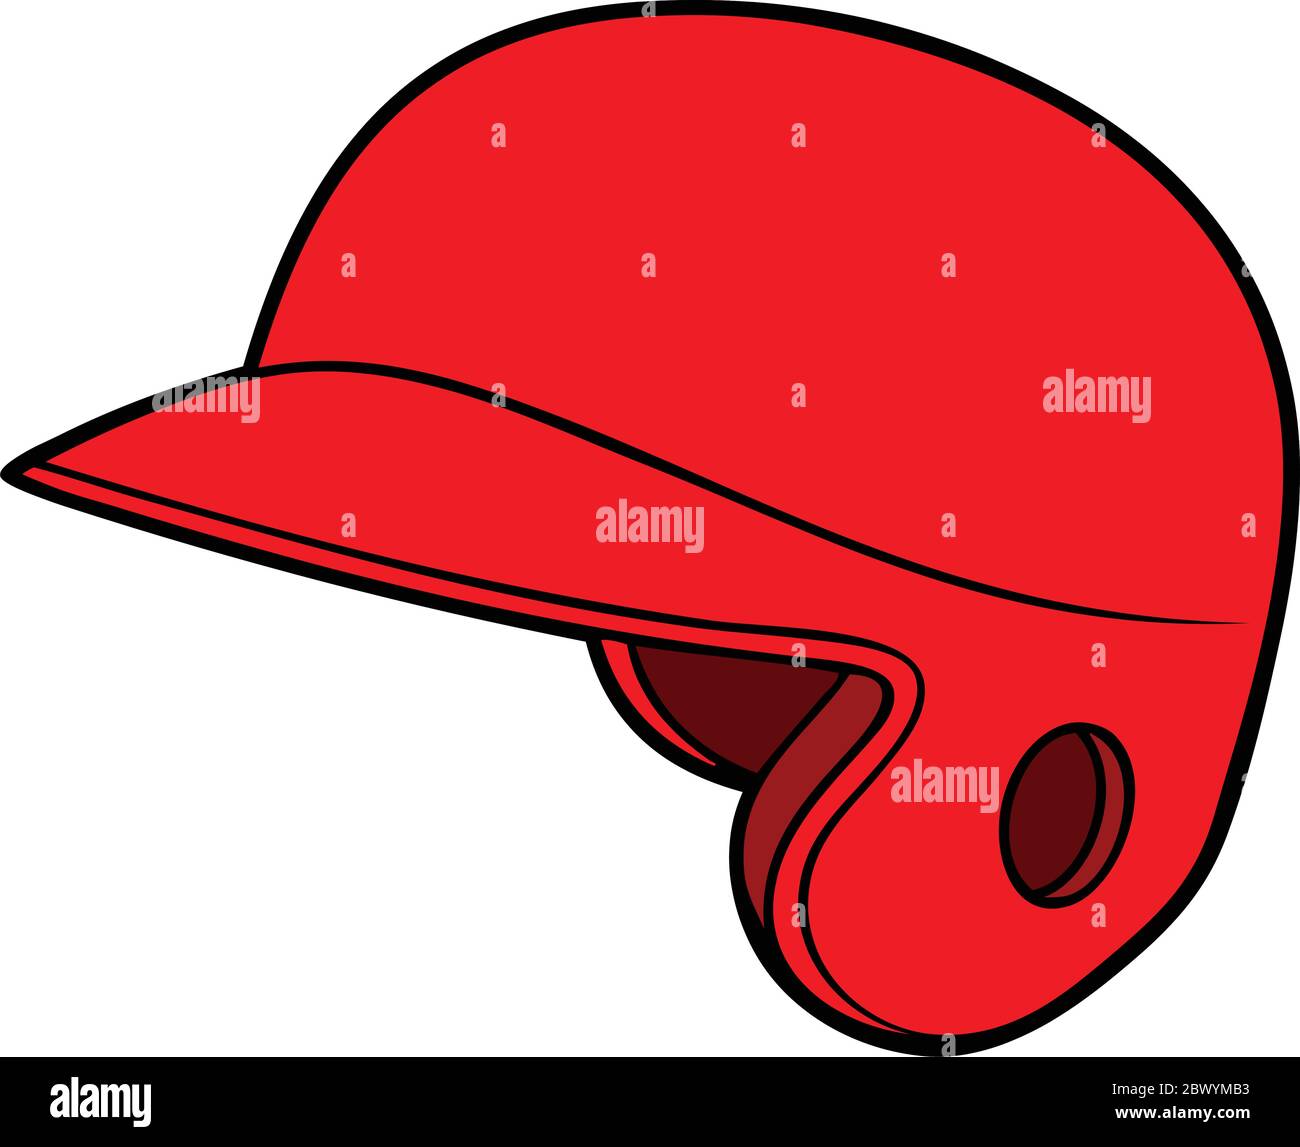 Casque de base-ball - UNE illustration de dessin animé d'un casque de base- ball Image Vectorielle Stock - Alamy